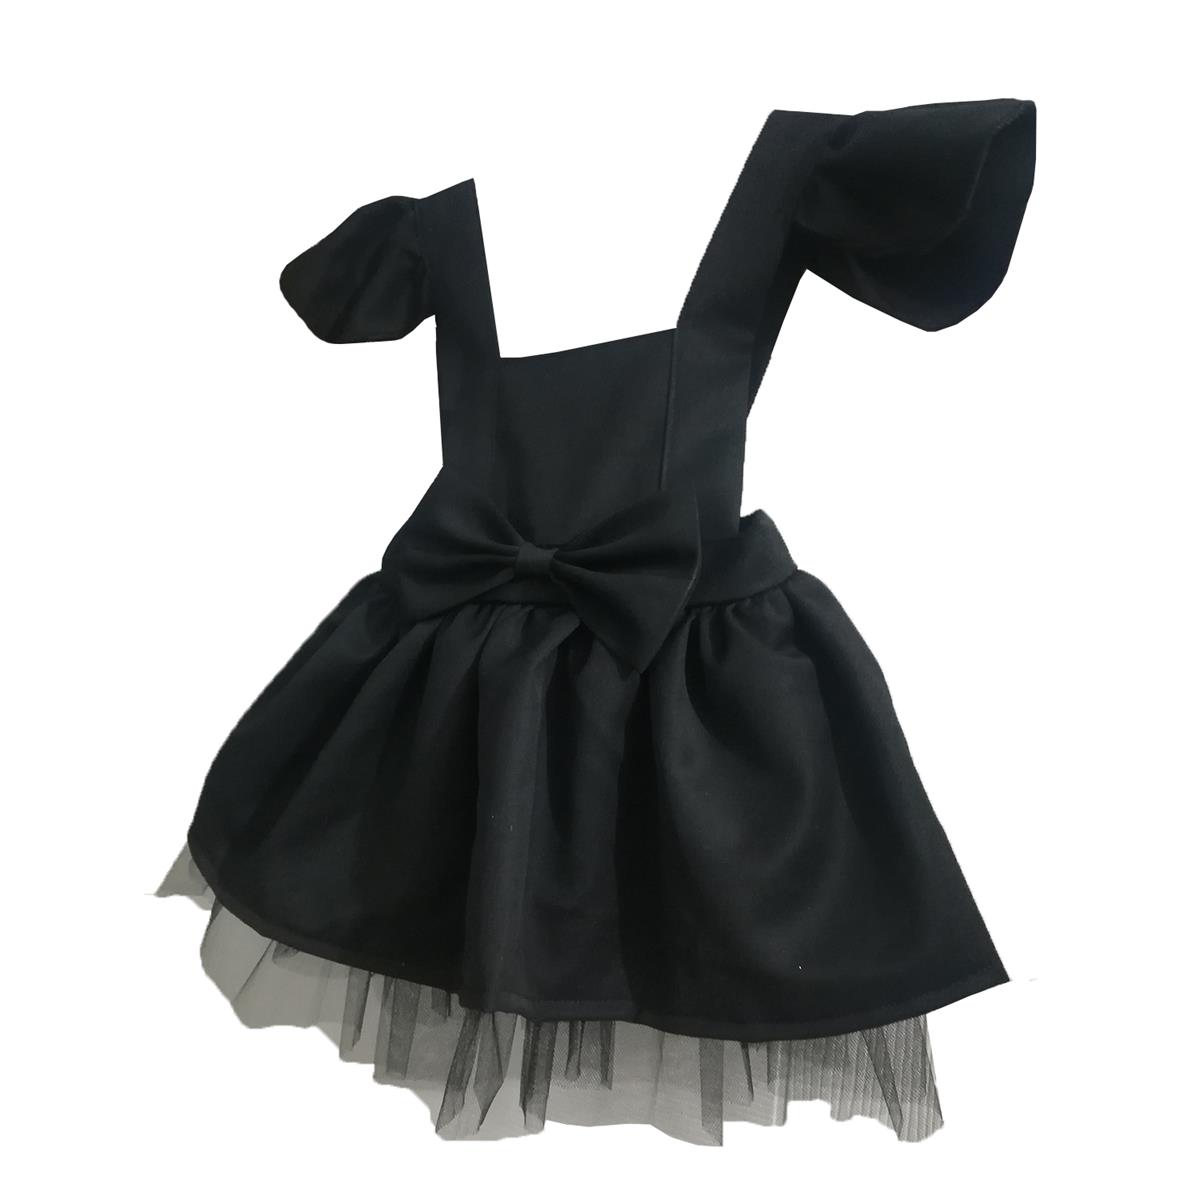 Shecco Babba Kız Çocuk Elbise Siyah Fiyonklu 1-4 Yaş